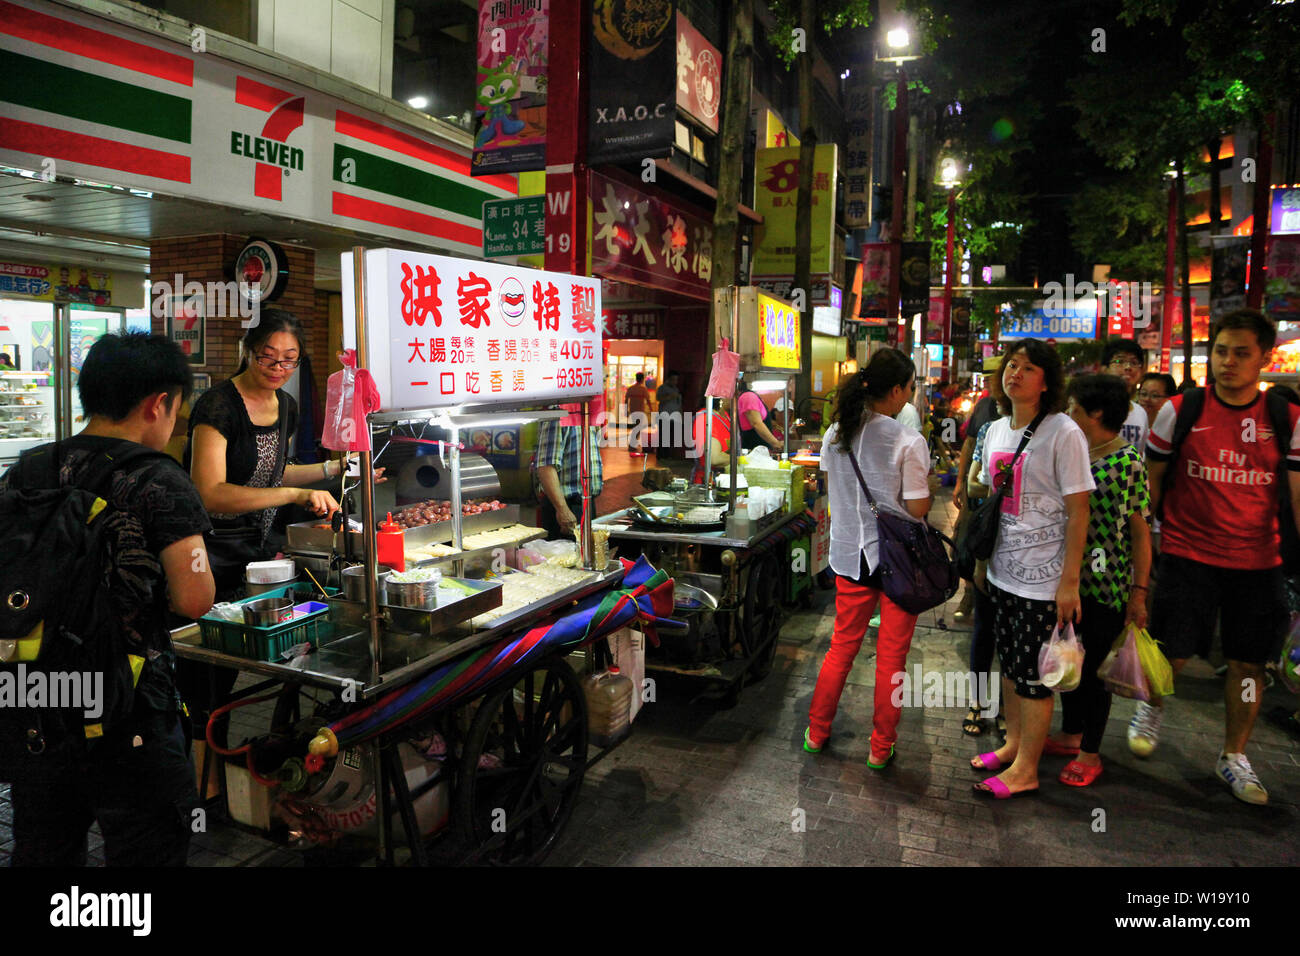 TAIPEI, TAIWAN - JUL 15, 2013: Food cart vendors and visitors along busy Hankou Street at Ximending youth shopping district in Taipei, Taiwan. Ximendi Stock Photo